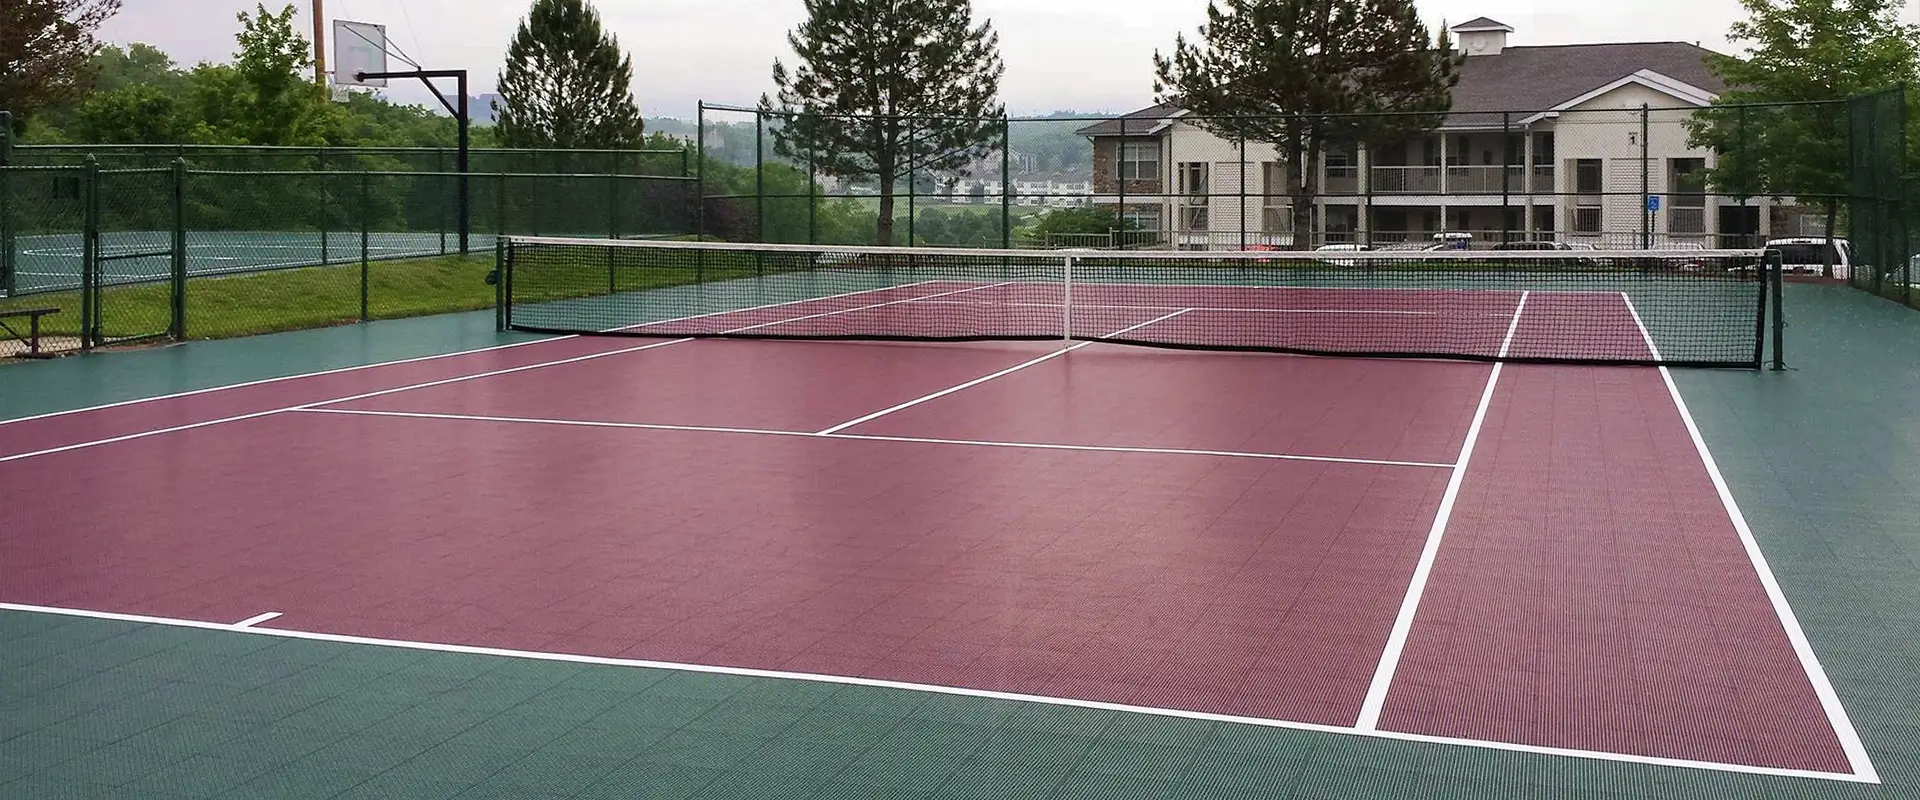 Tennis court at an apartment complex